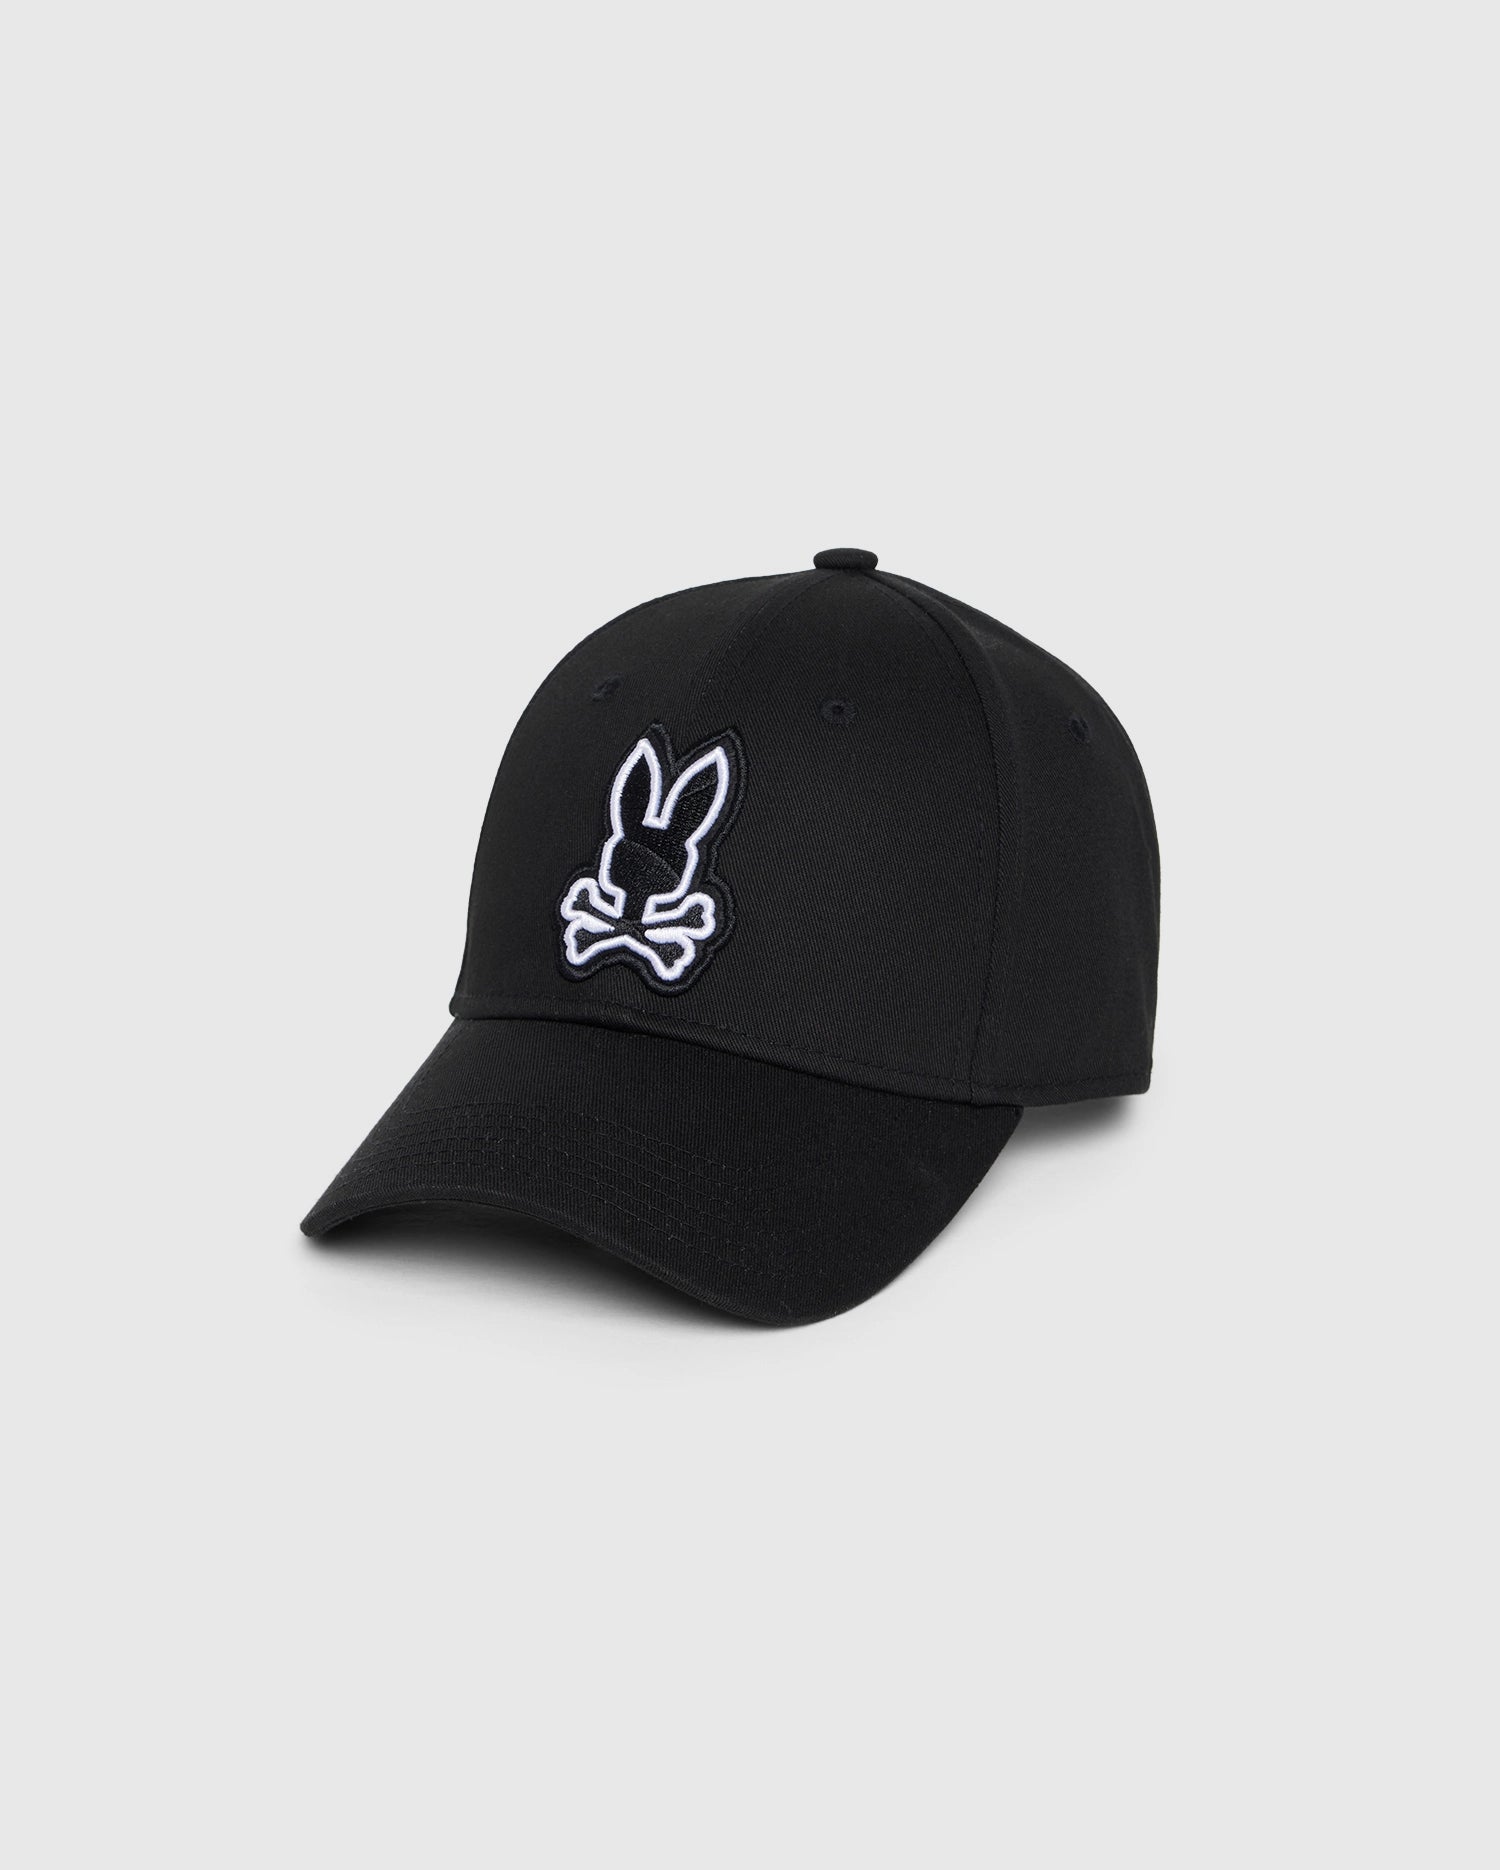 Psycho | Accessories Hats Bunny | & Baseball Caps